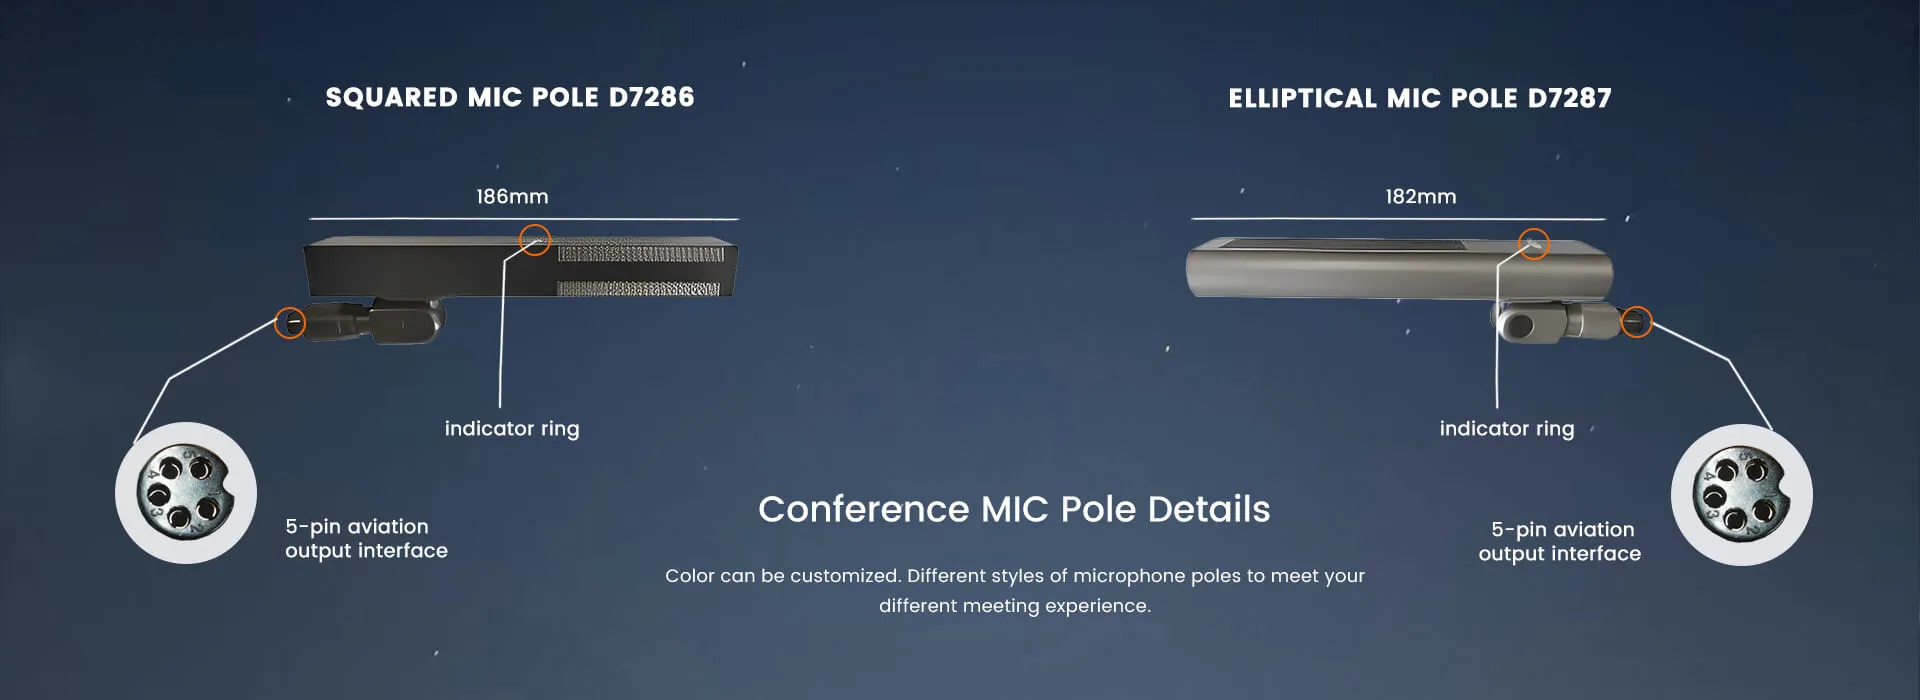 Elliptical Conference Mic Pole